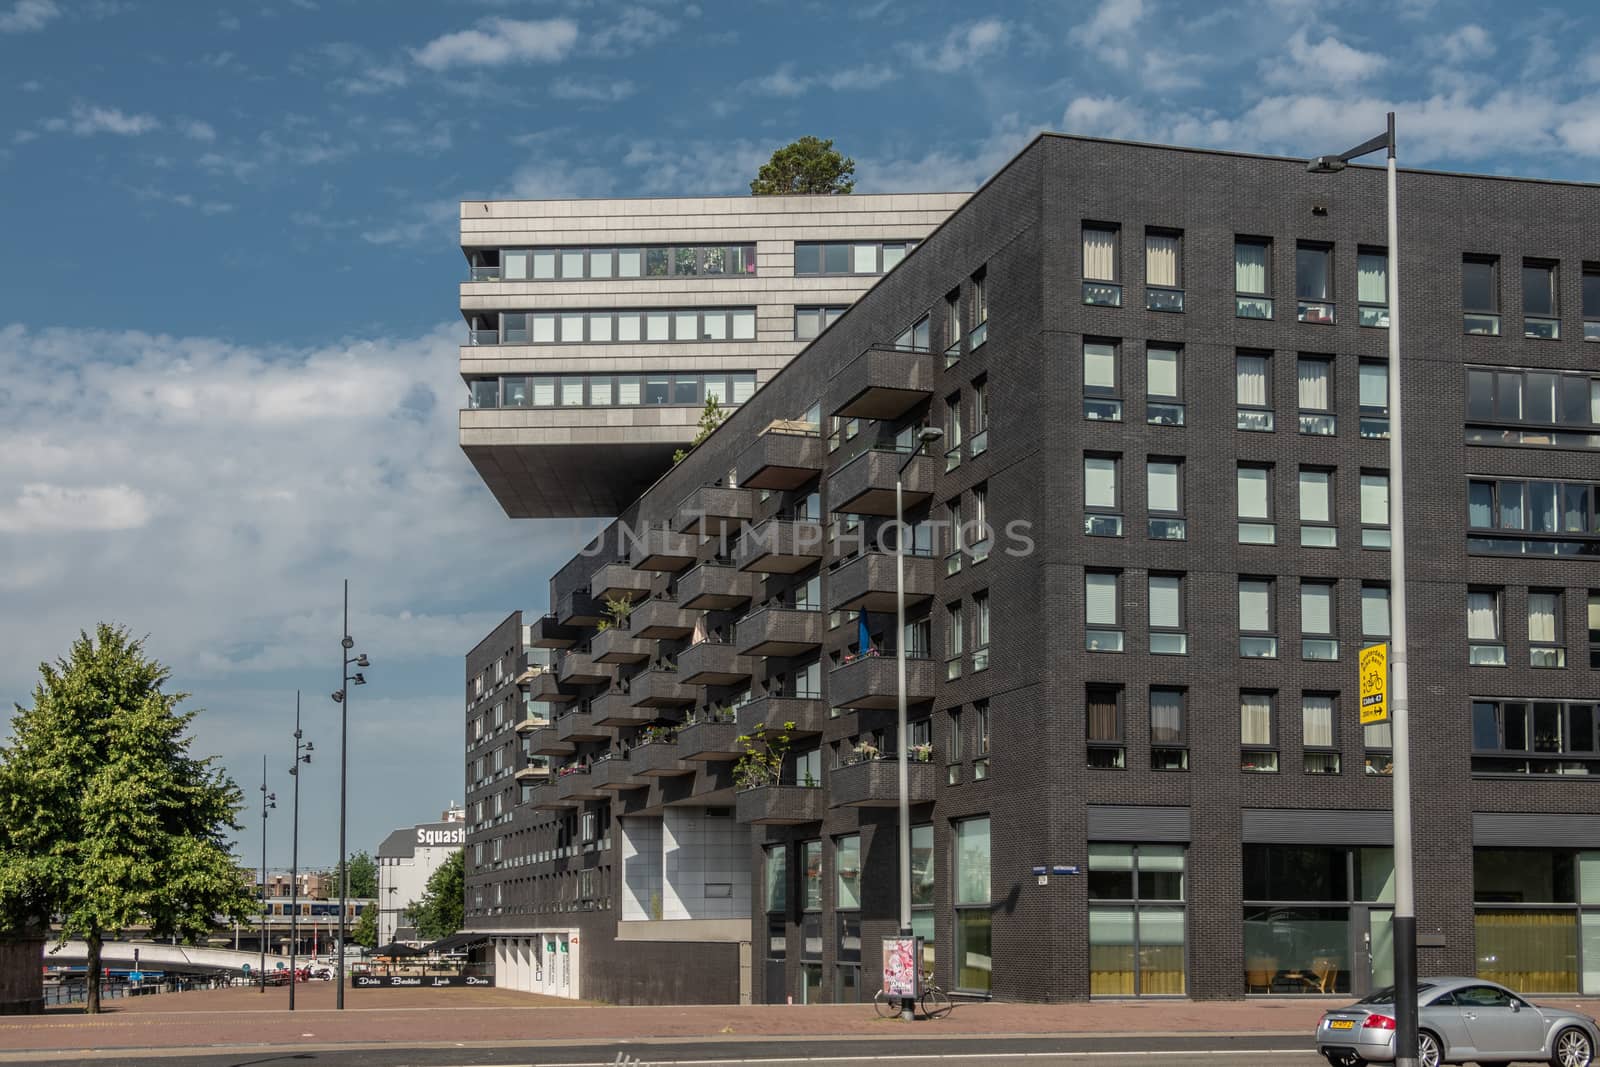 Modern office building complex on Westerdokplein, Amsterdam Neth by Claudine